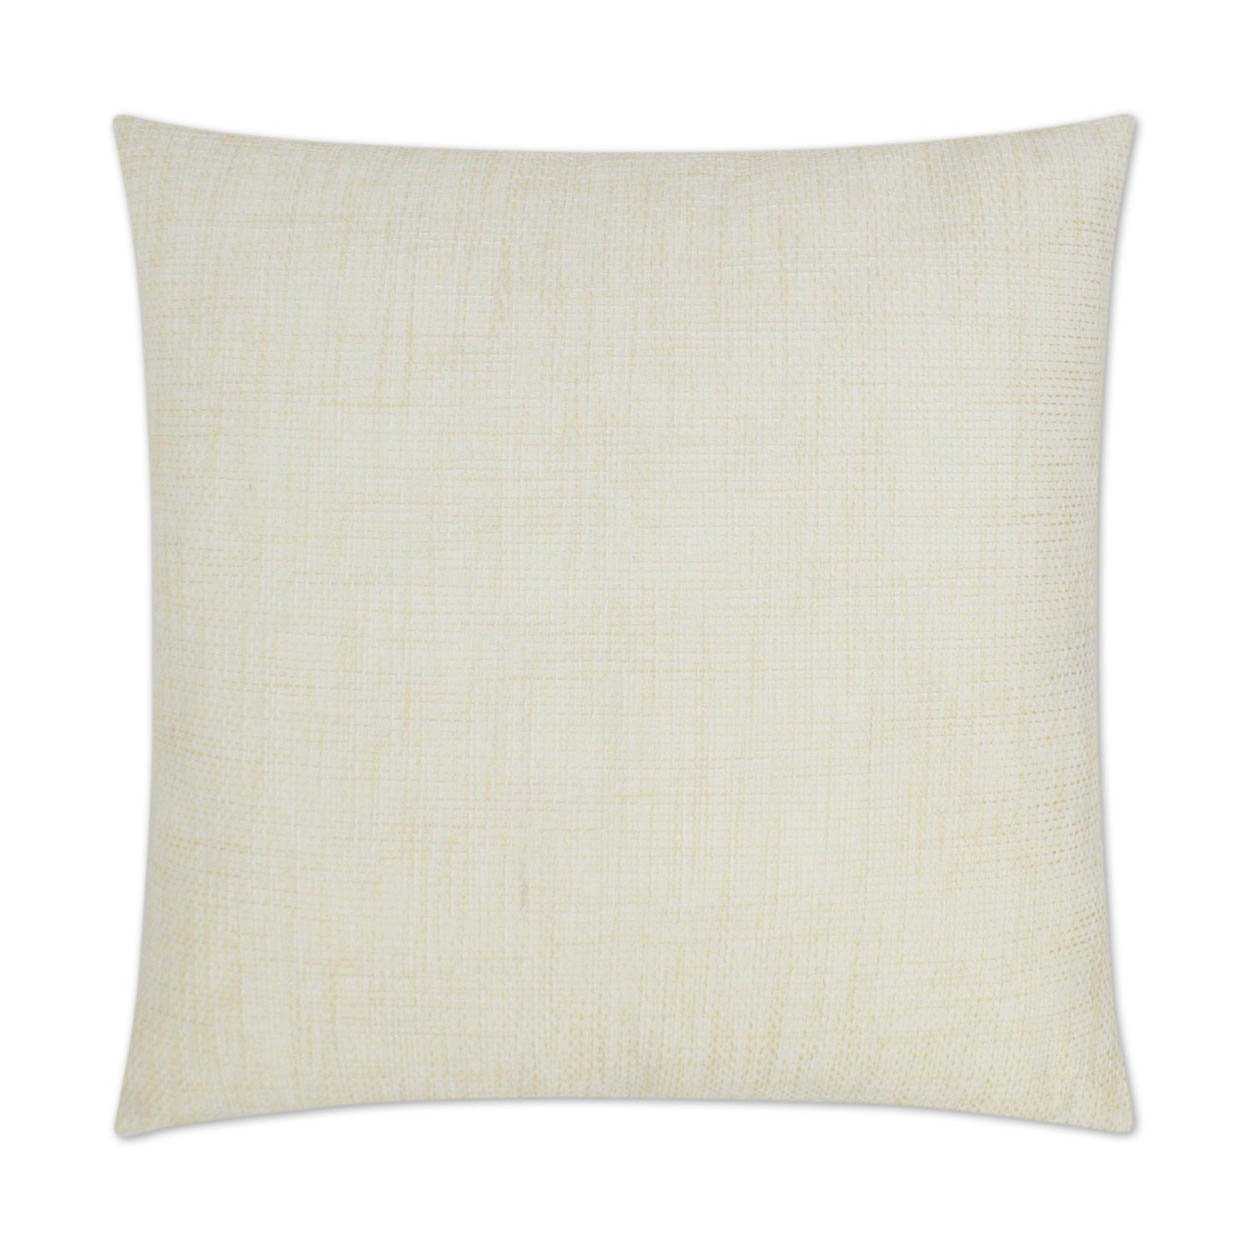 Double Trouble Linen Outdoor Pillow 22x22